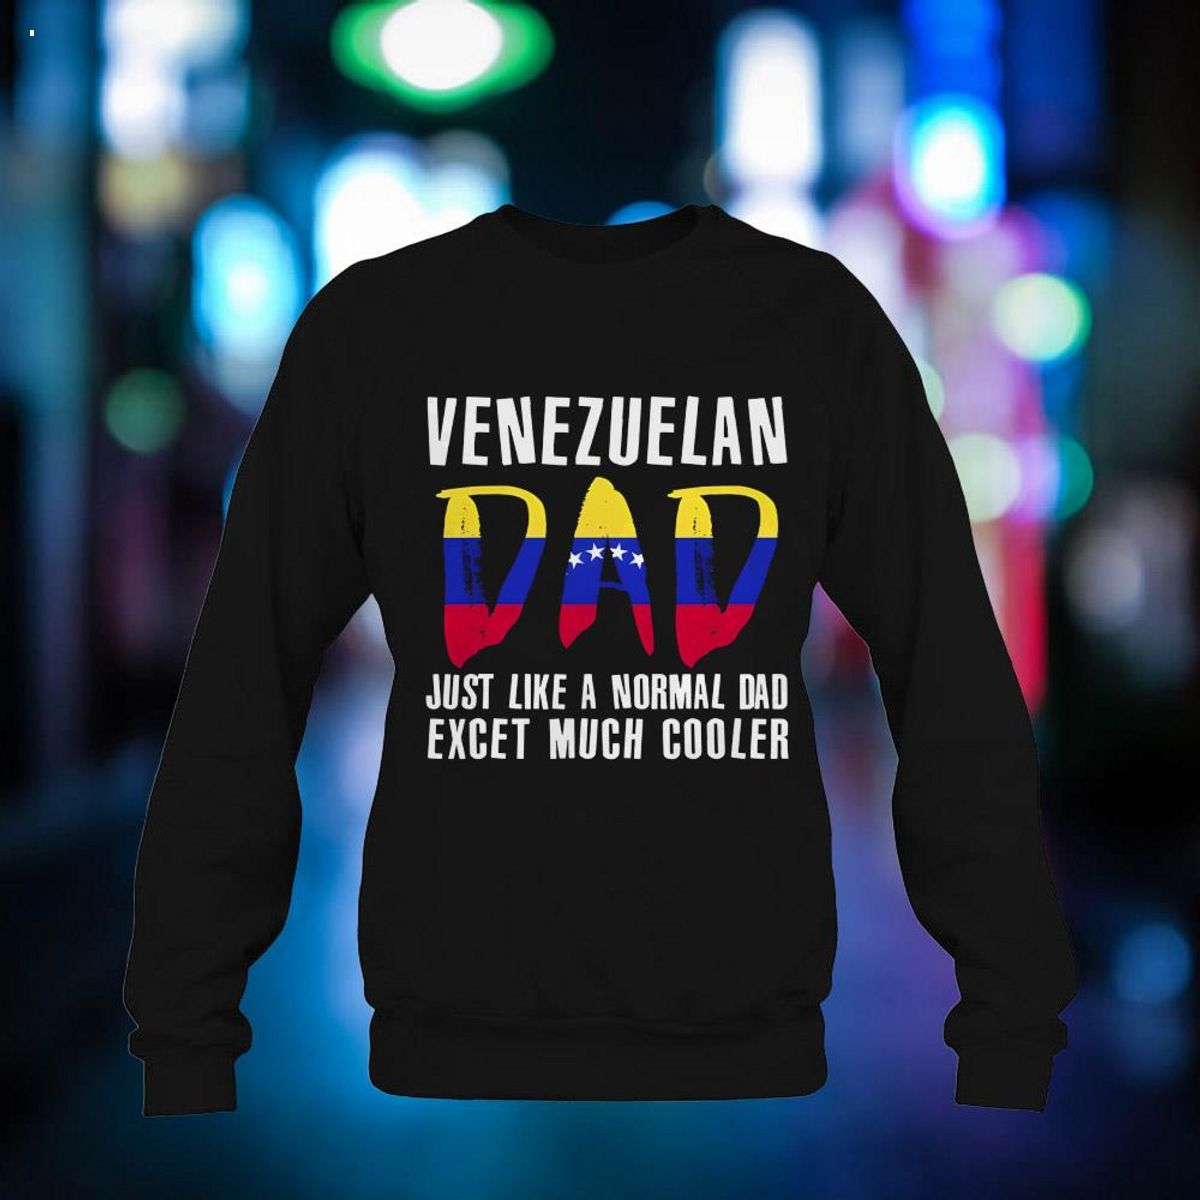 Venezuelan Dad Like Normal Except Cooler Shirt